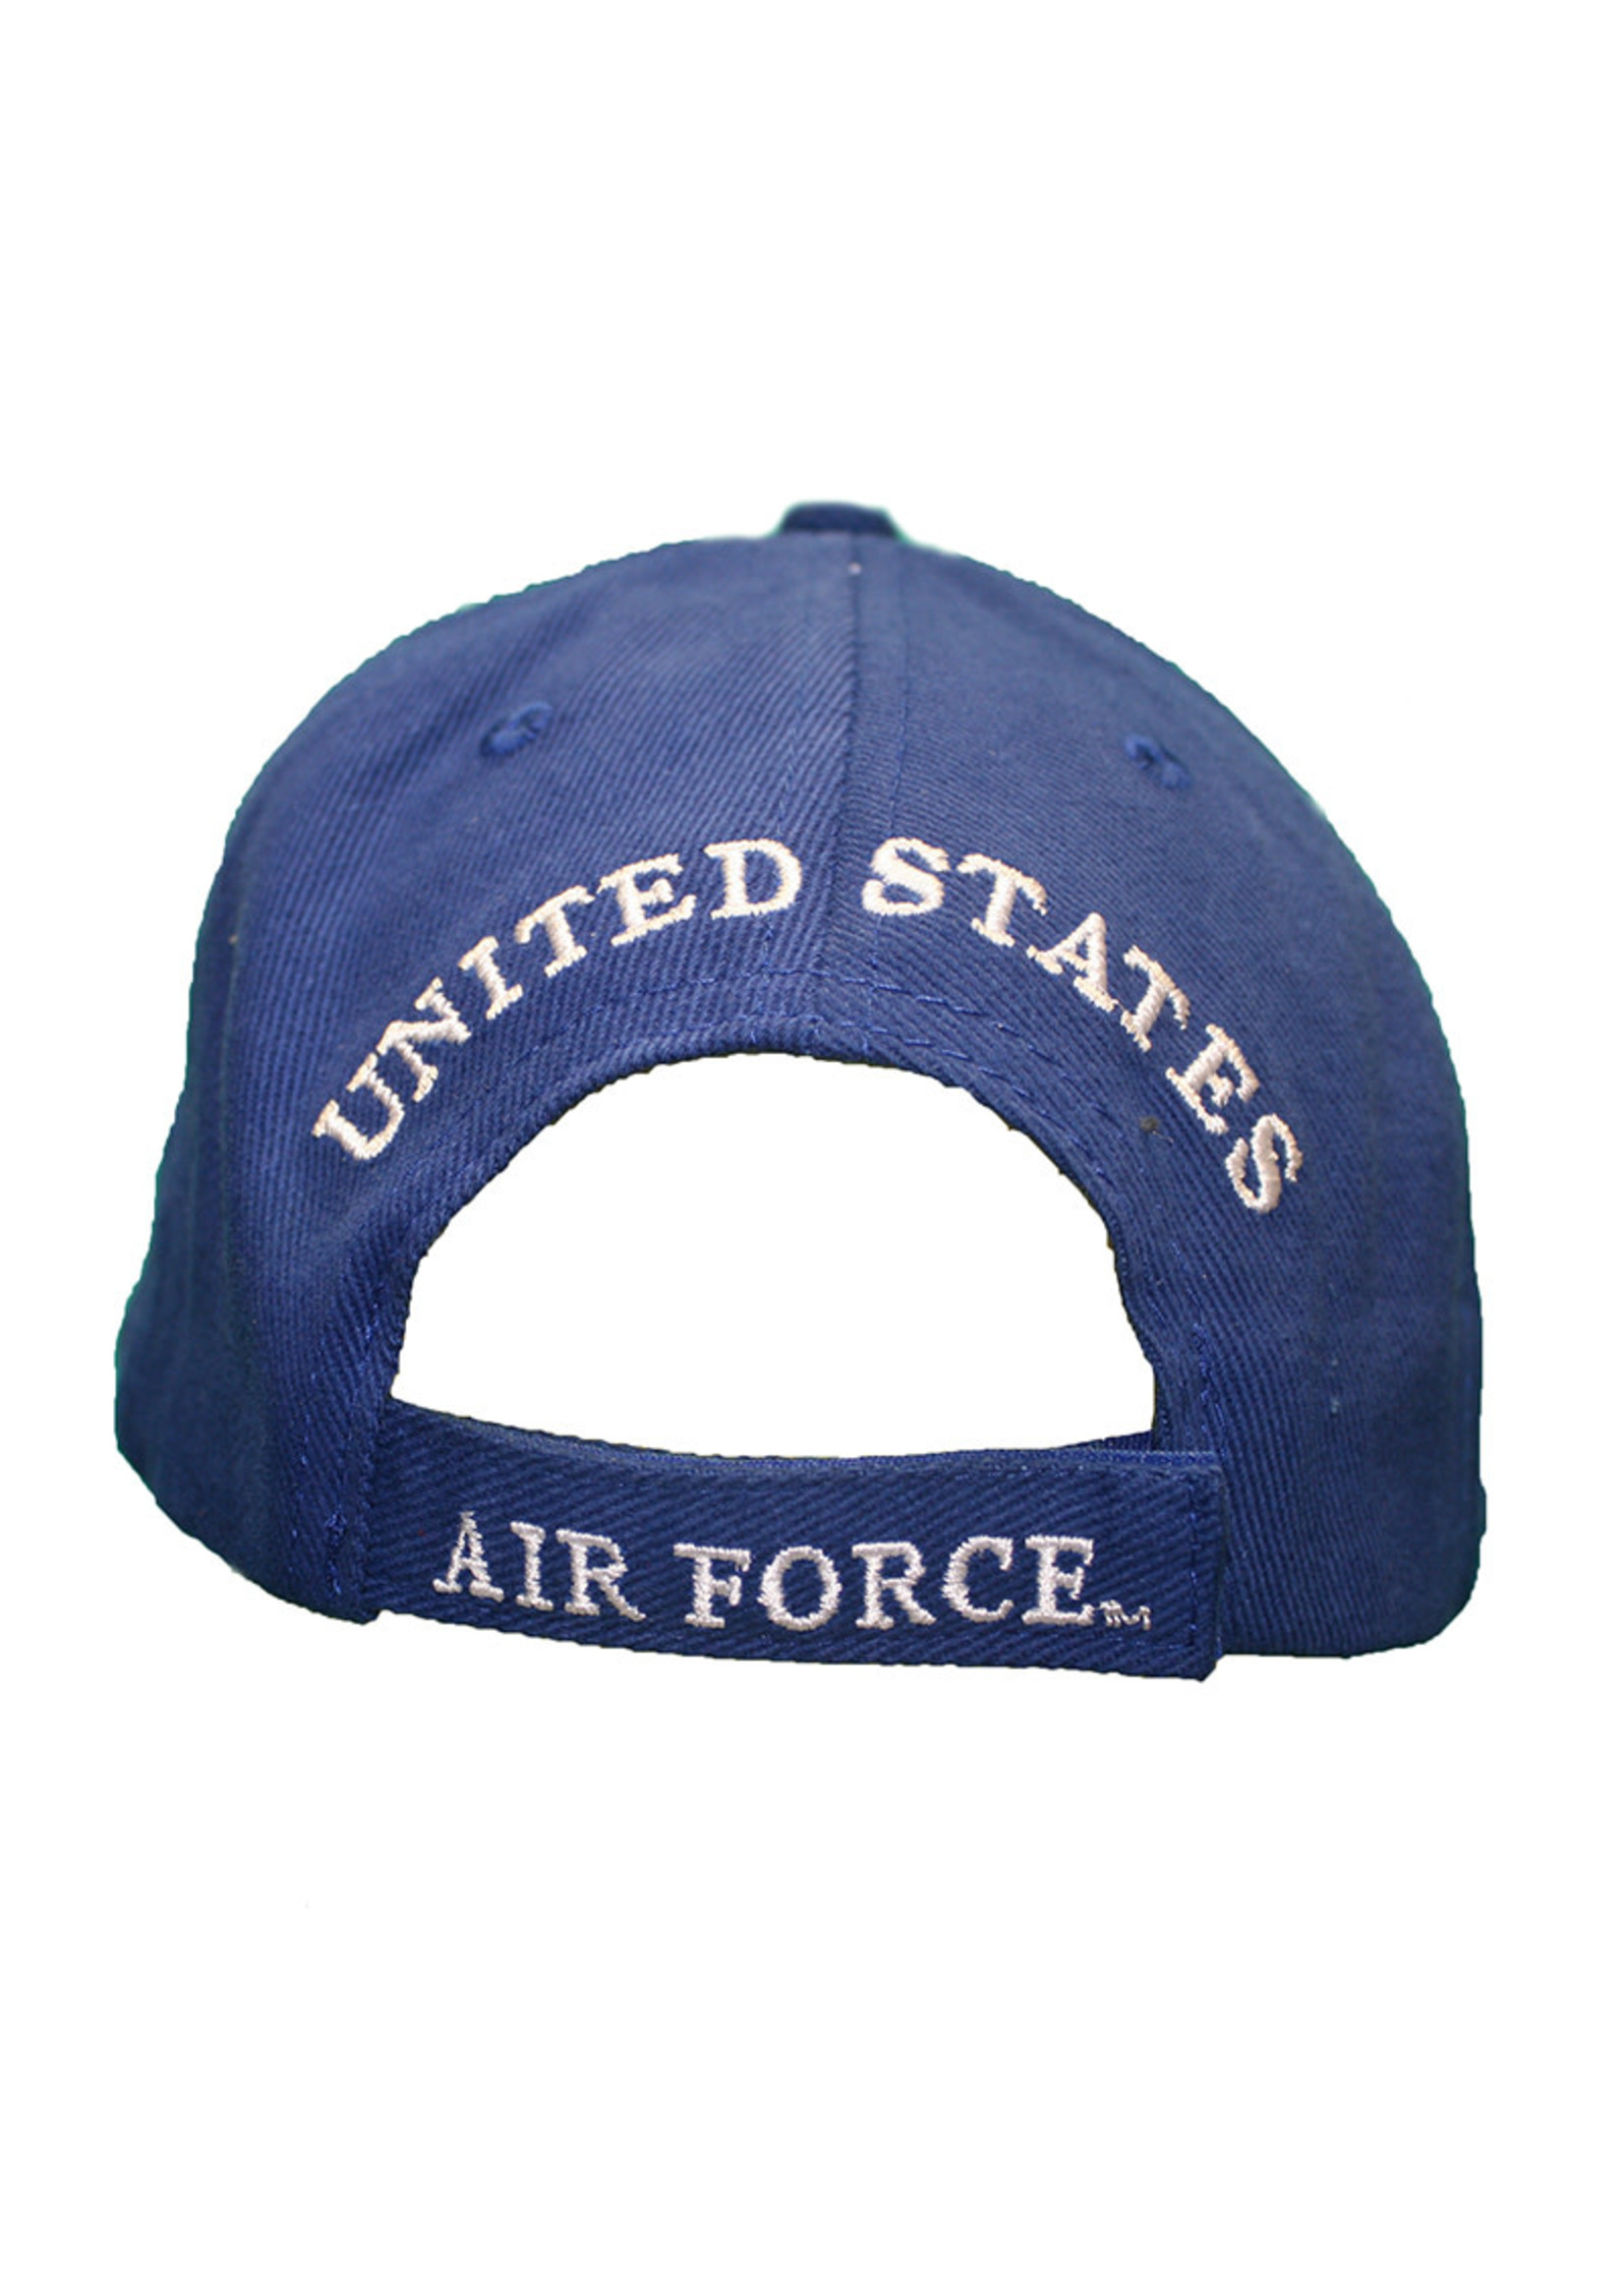 Eagle Emblems Cap Air Force Emblem Royal Blue